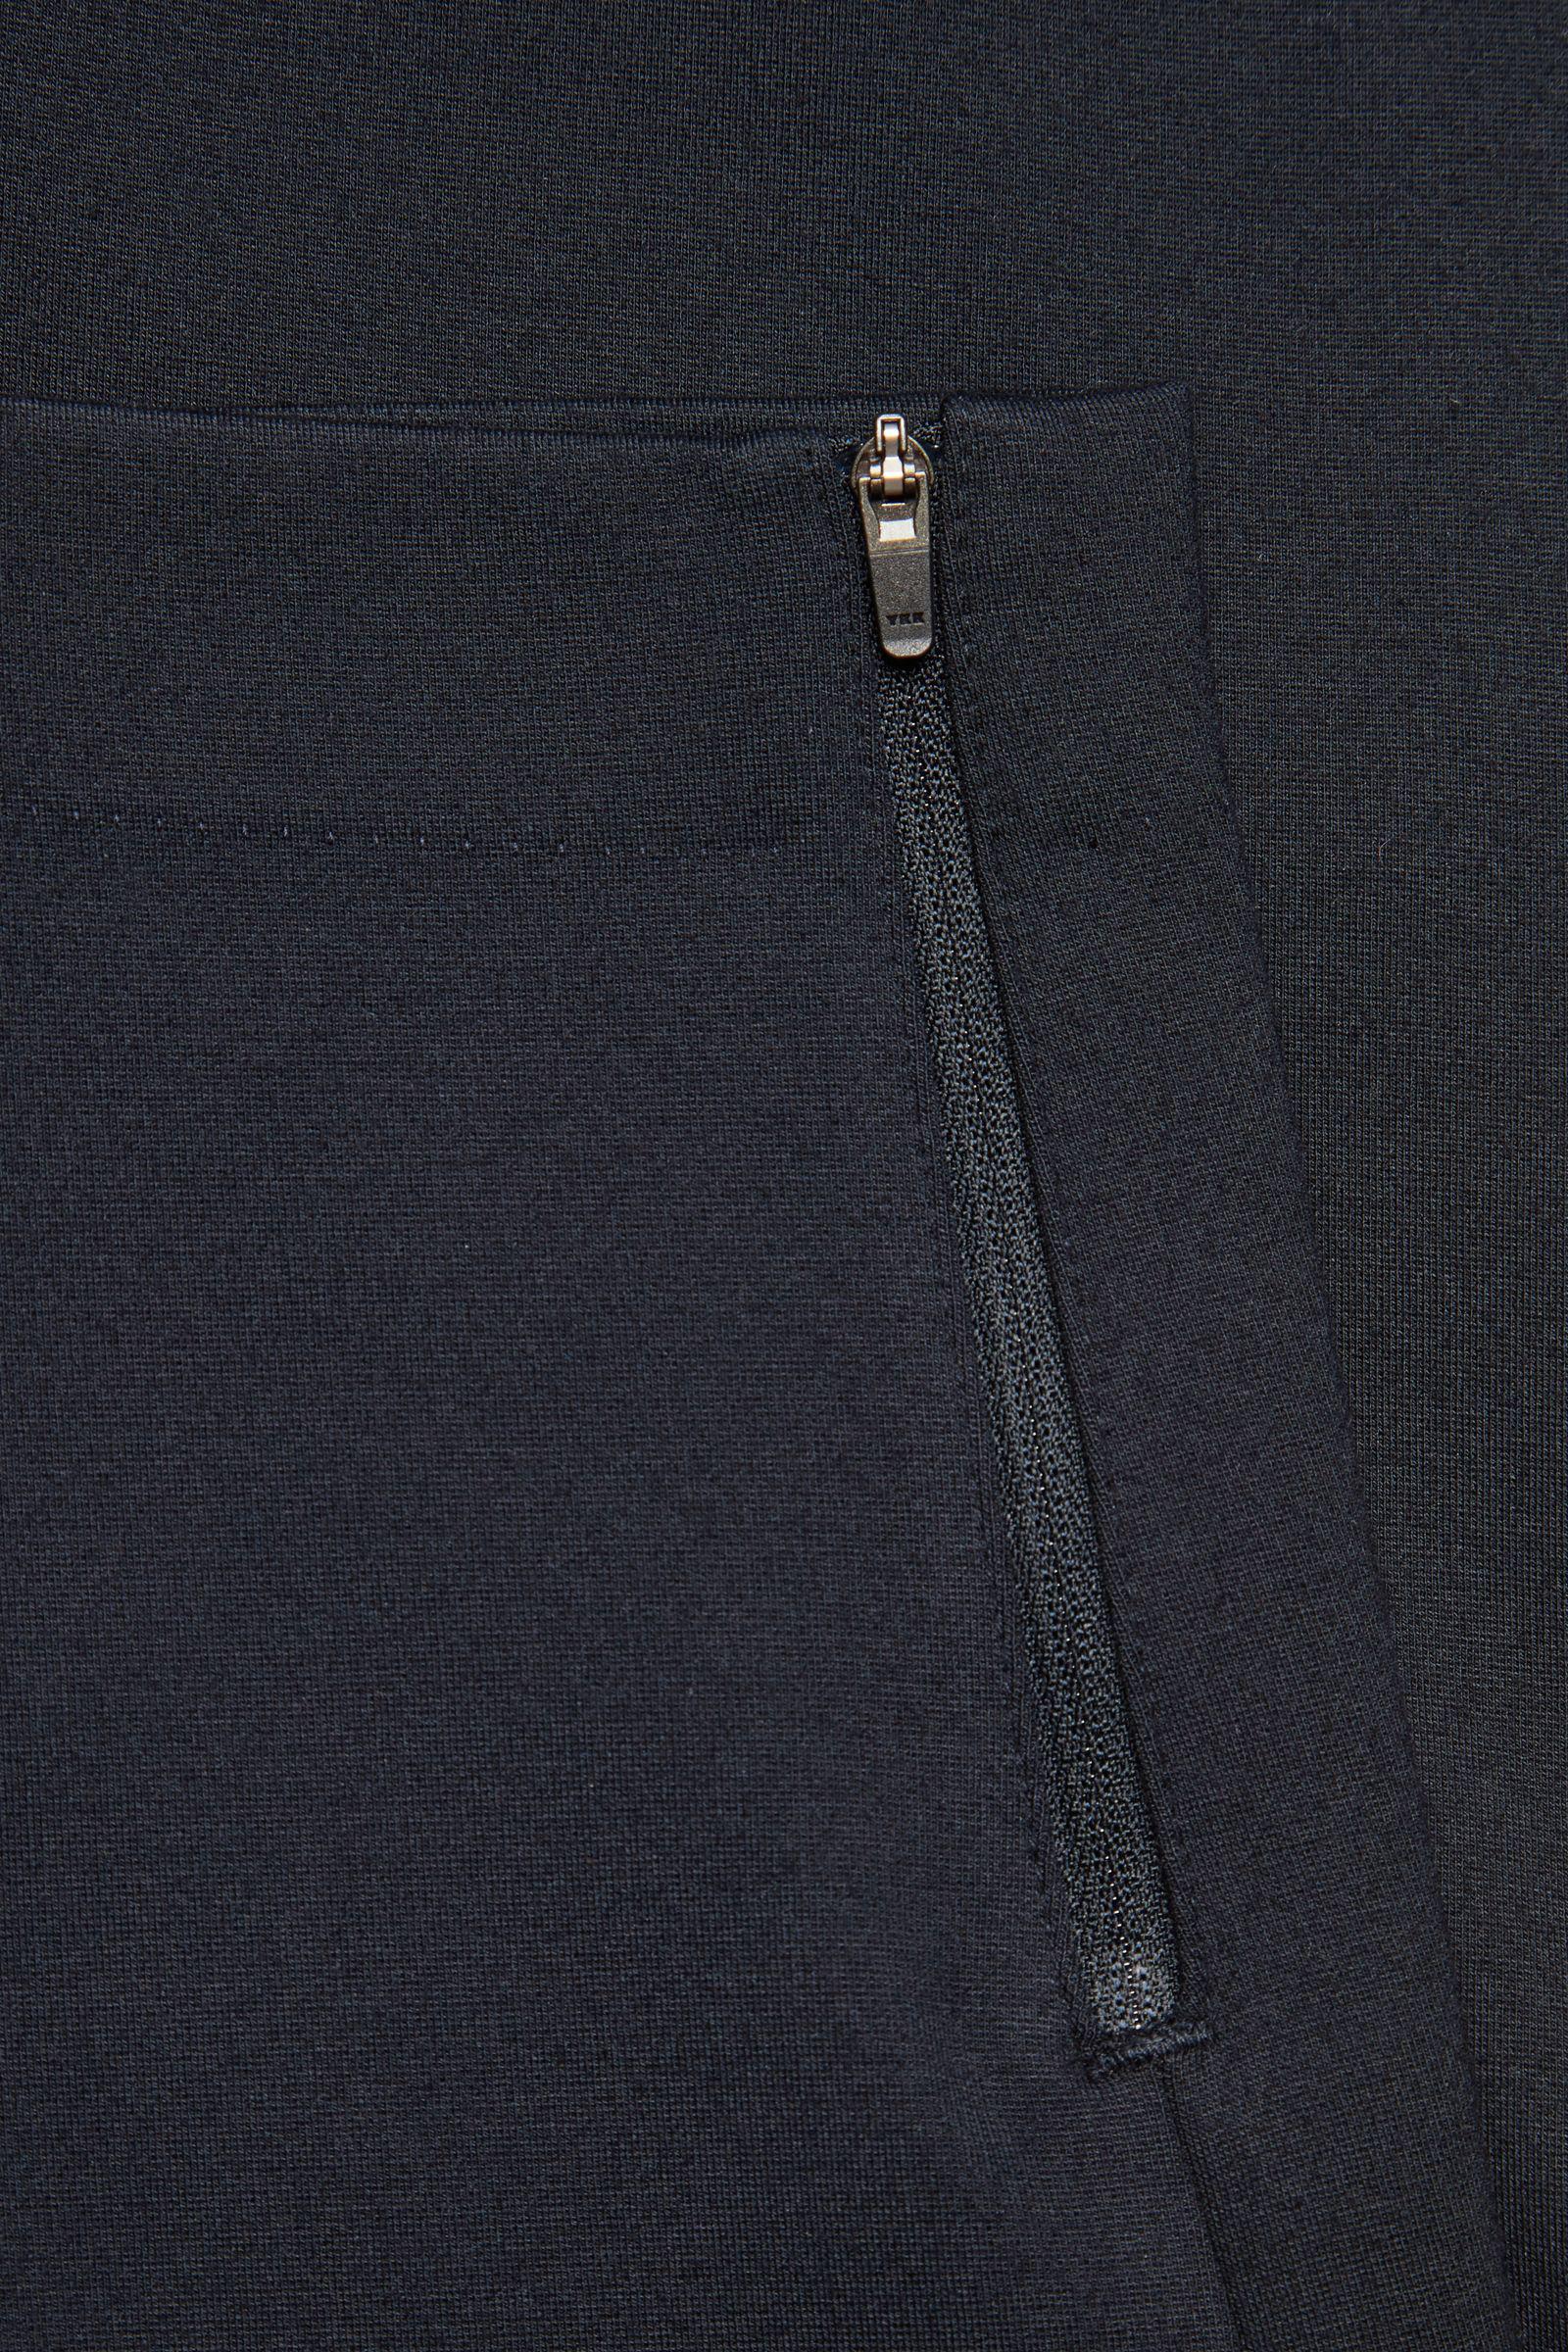 COS Zip-cuff Jersey Trousers in Blue for Men | Lyst